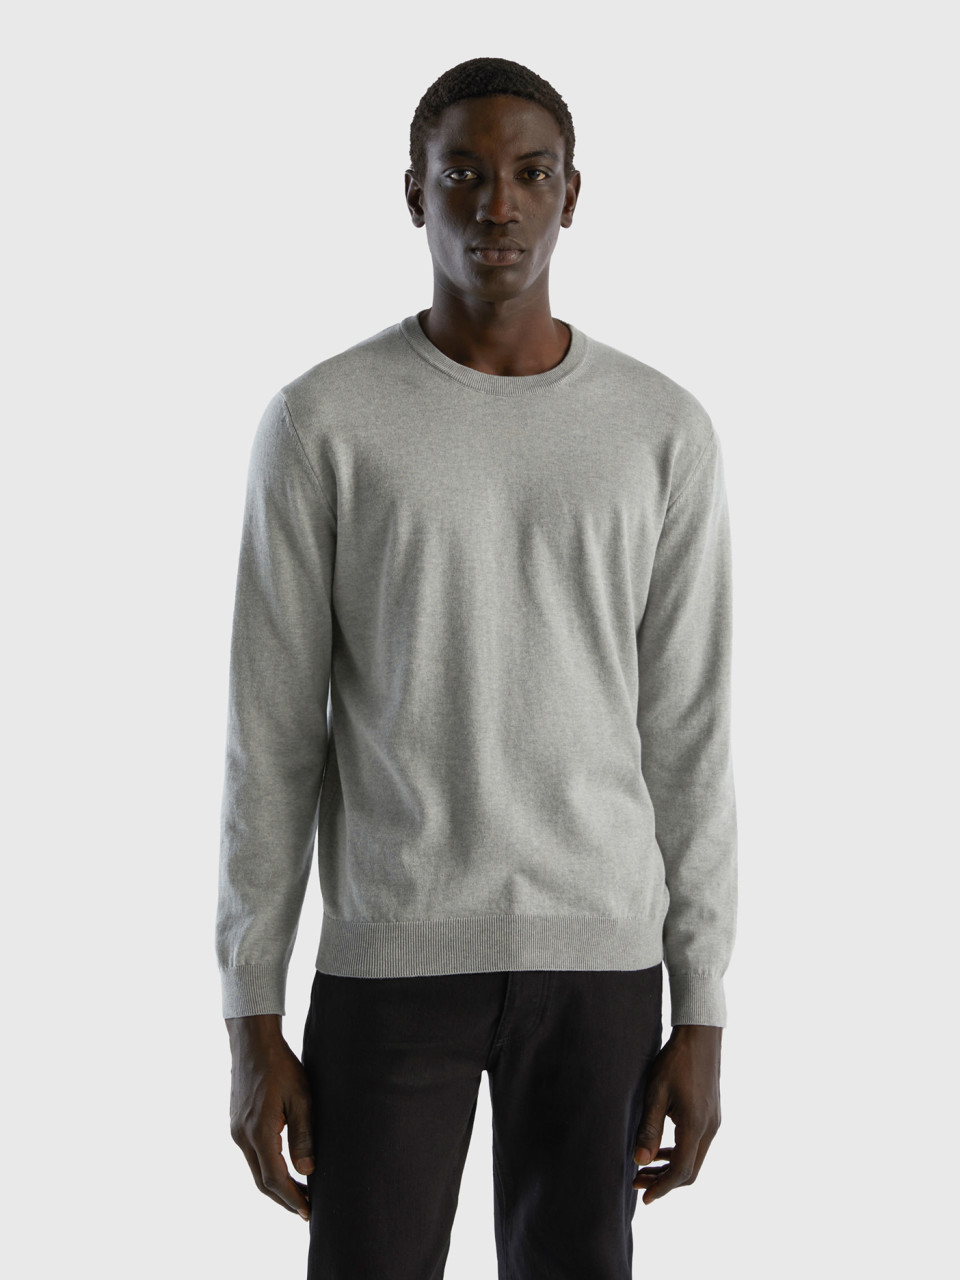 Benetton, Crew Neck Sweater In 100% Cotton, Light Gray, Men